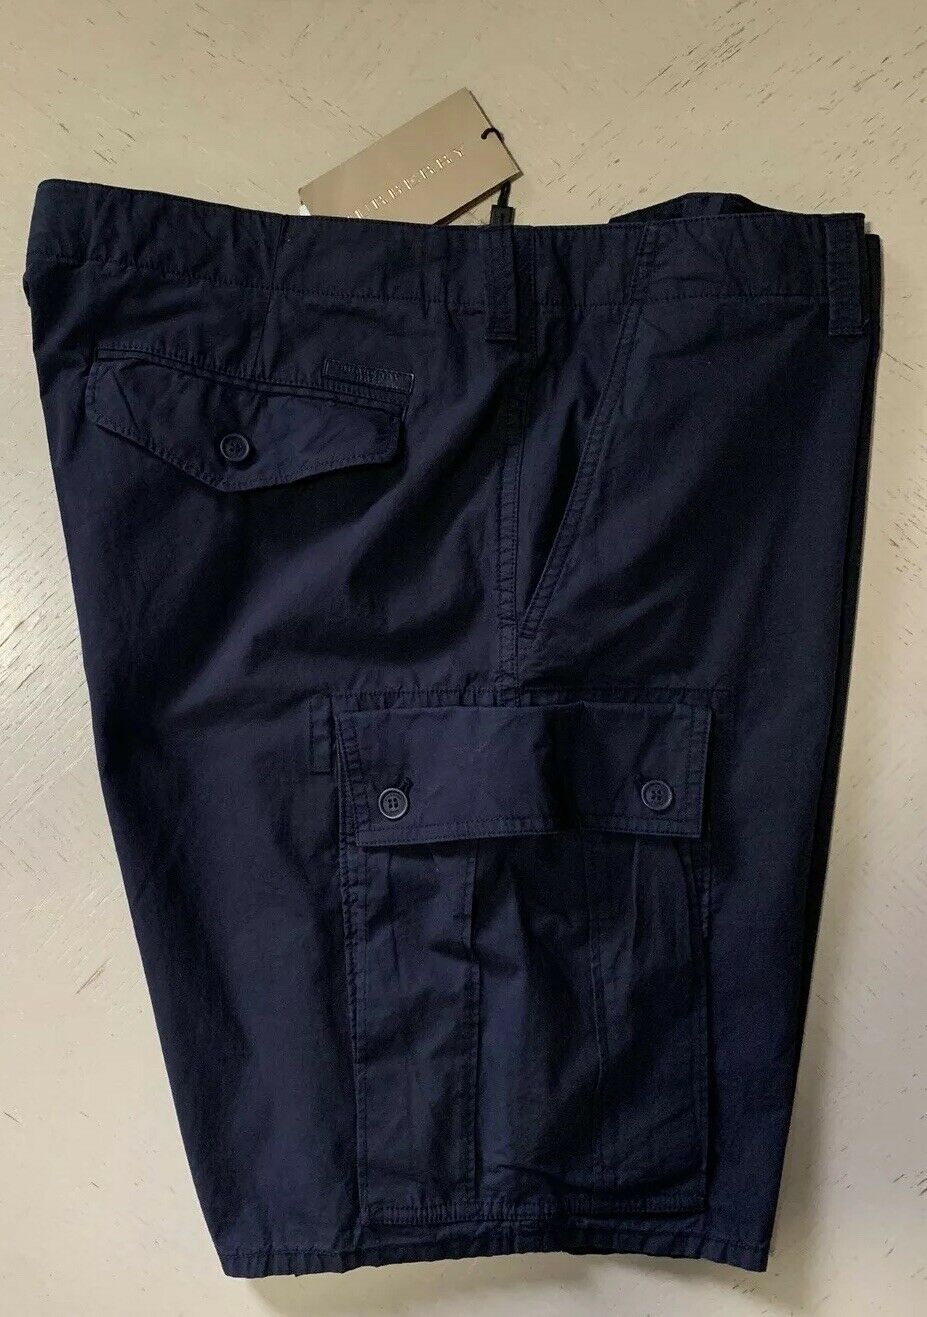 New $275 Burberry Brit Short Pants Navy Size 38